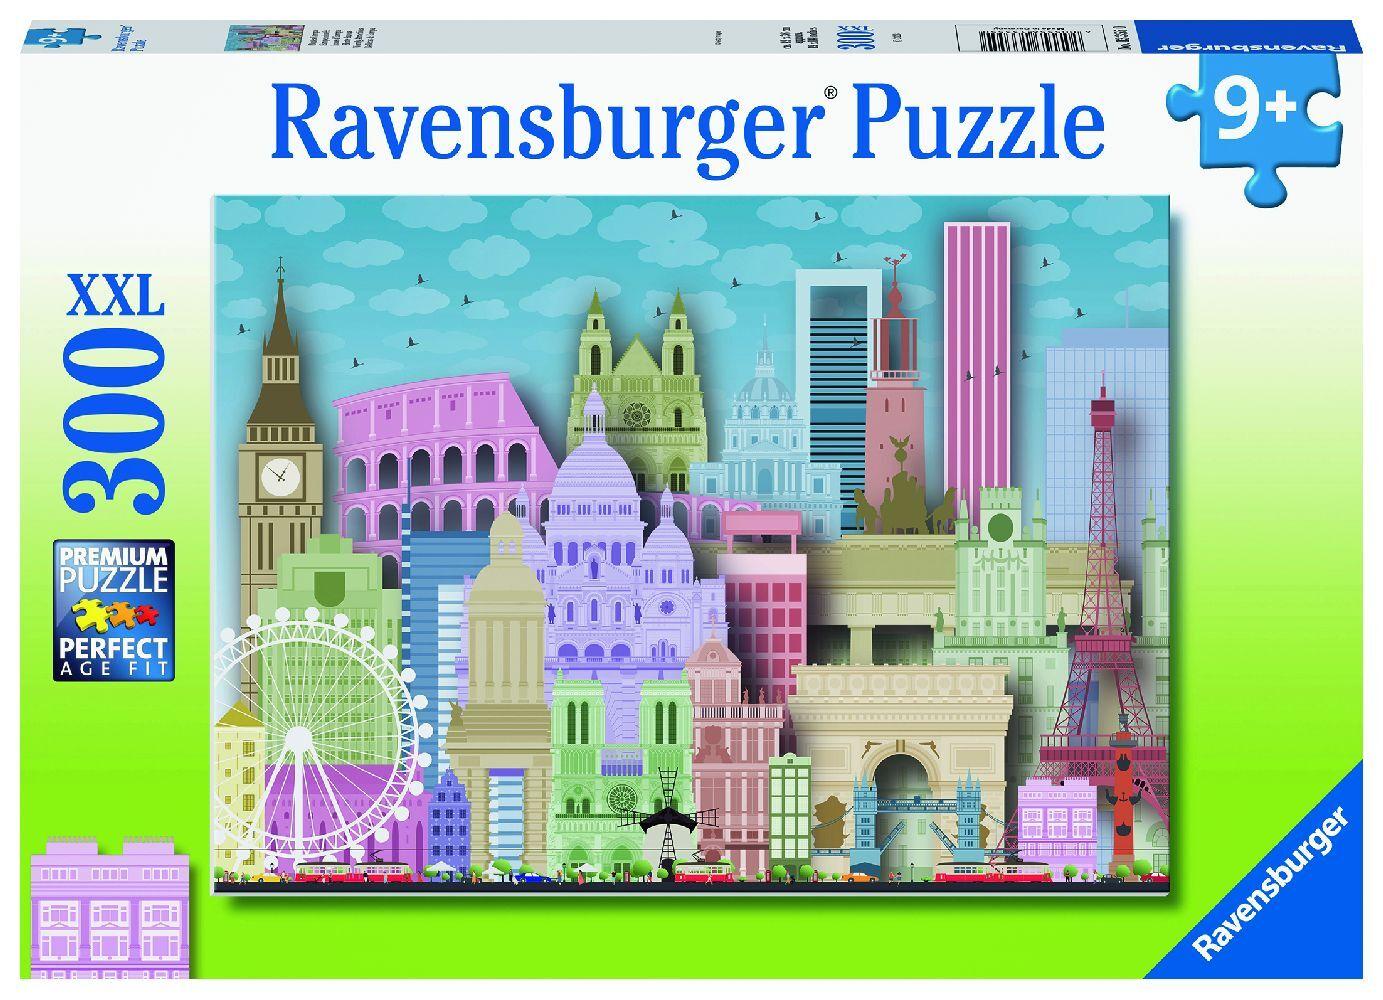 Ravensburger Kinderpuzzle - 13355 Buntes Europa - 300 Teile Puzzle für Kinder ab 9 Jahren